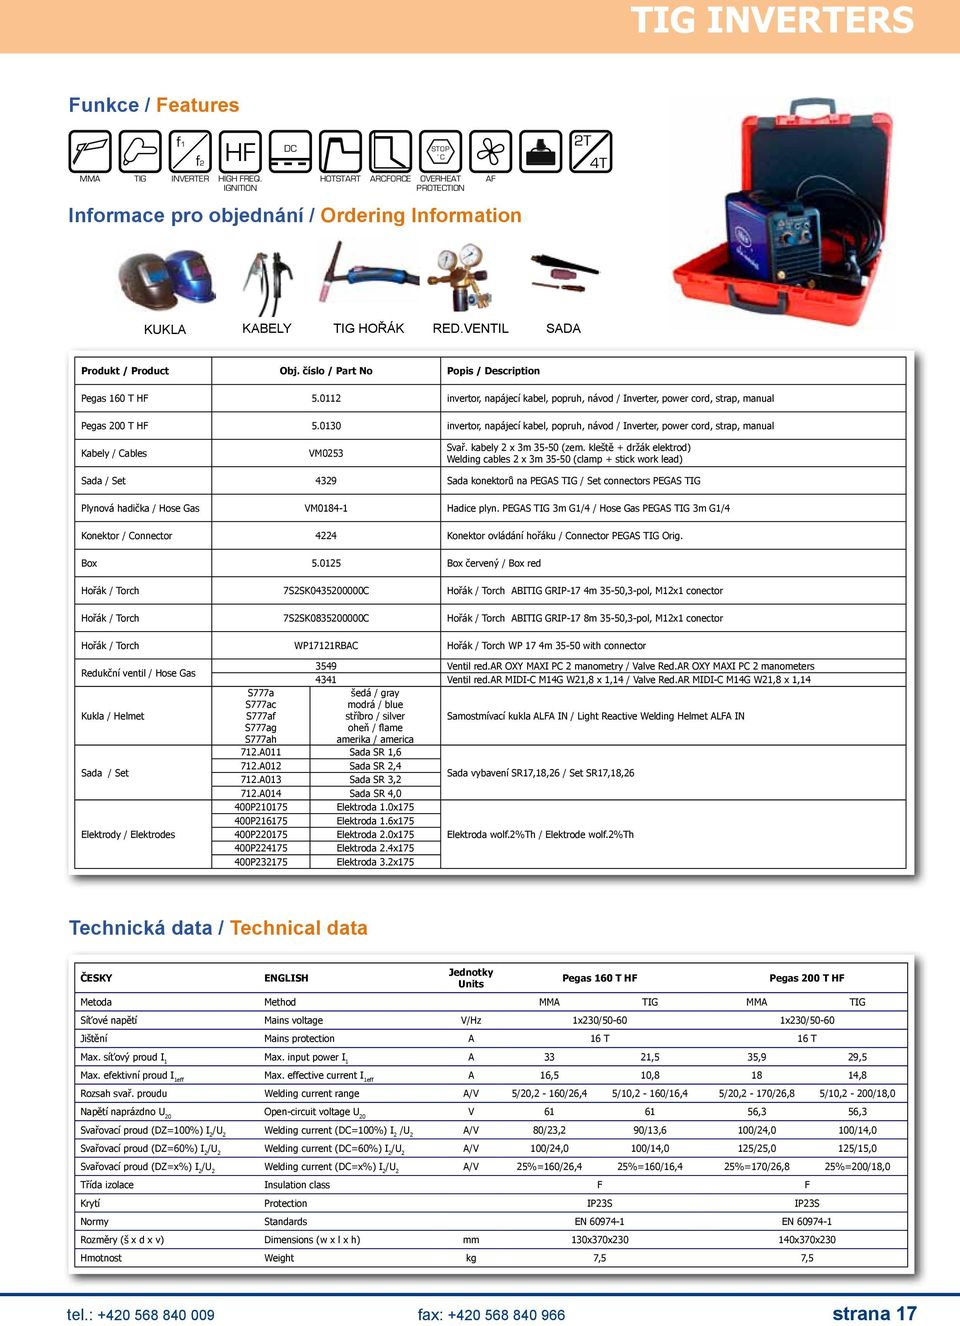 číslo / Part No Popis / Description Pegas 160 T HF 5.0112 invertor, napájecí kabel, popruh, návod / Inverter, power cord, strap, manual Pegas 200 T HF 5.